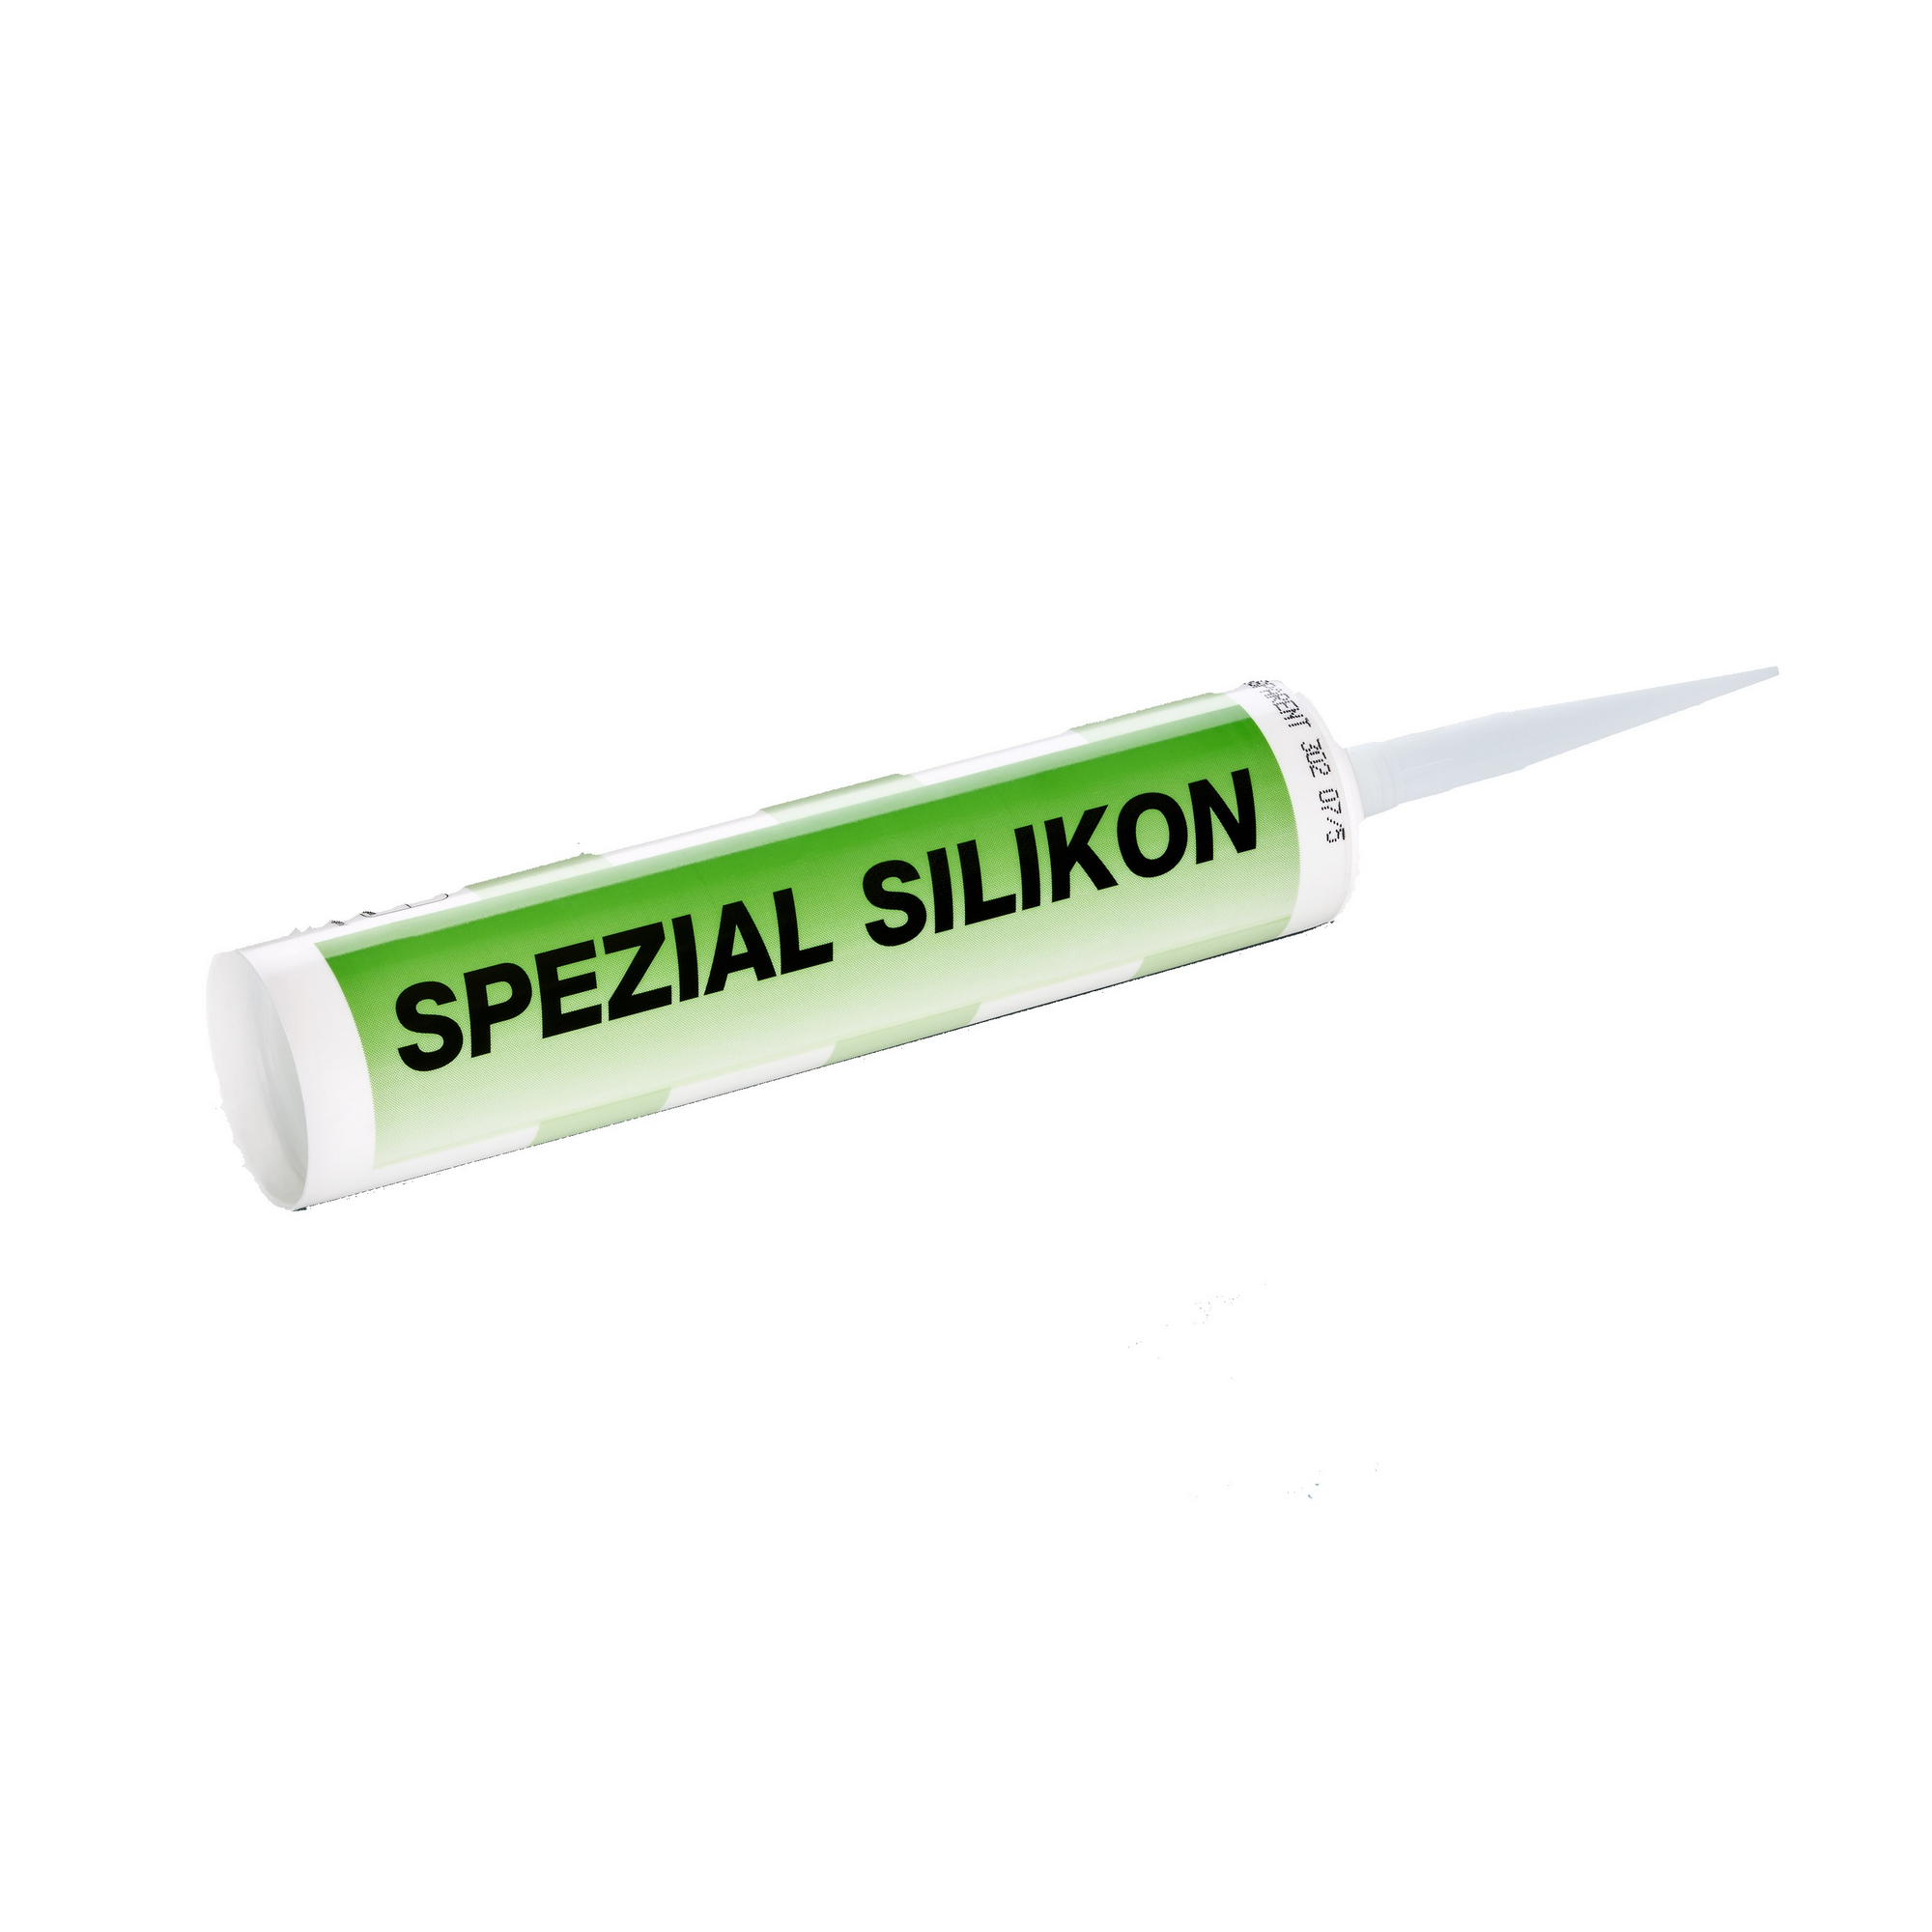 Spezial-Silikon transparent 310 ml + product picture